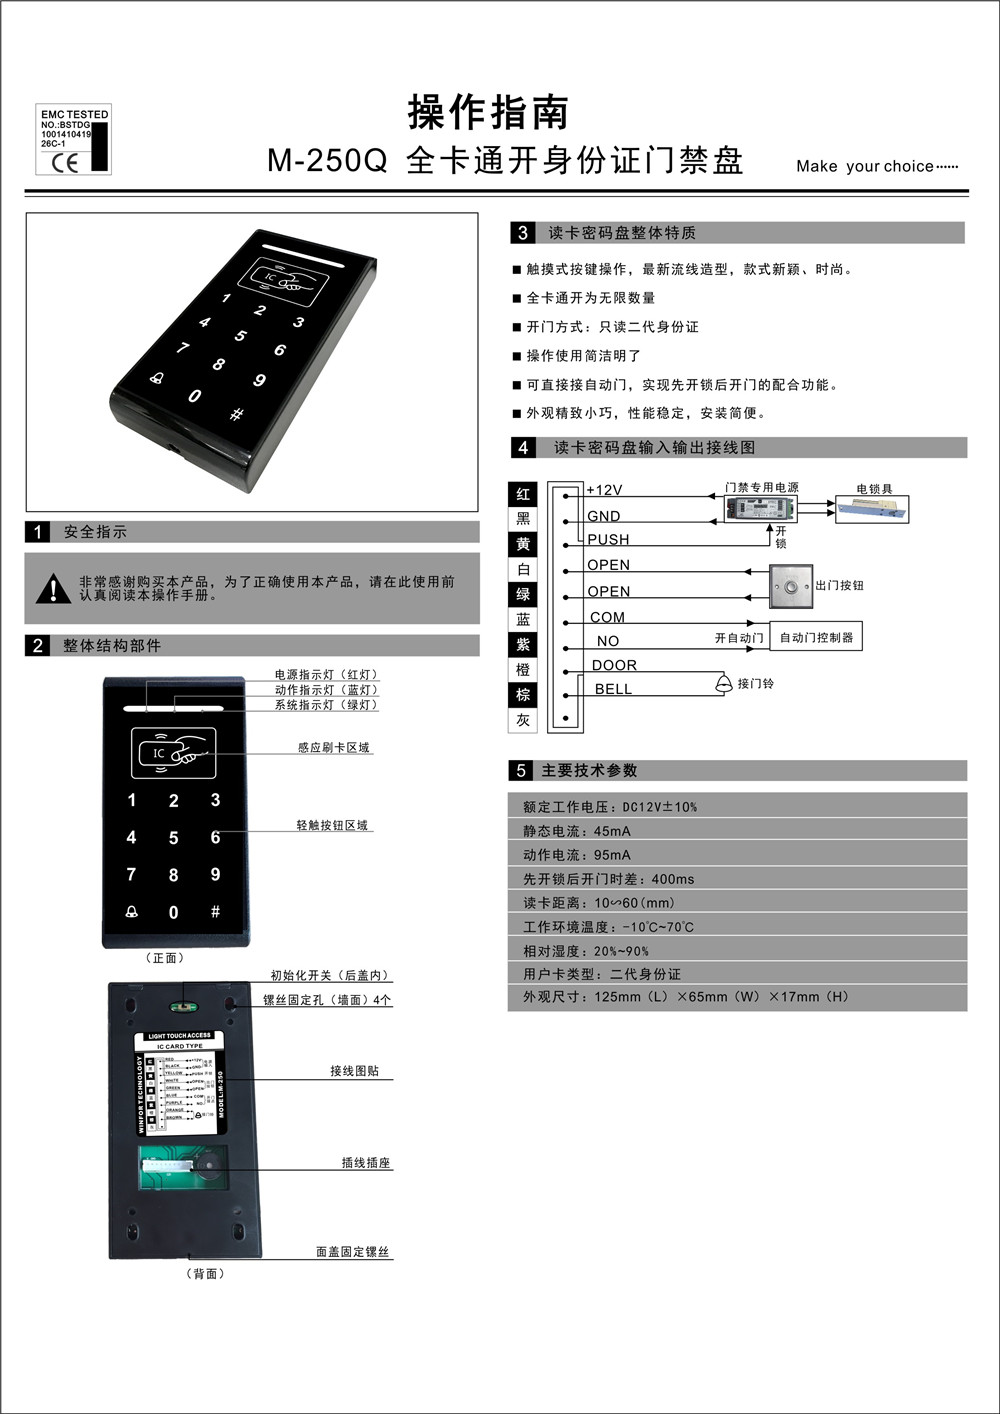 M-250Q Magnetic Card / ID Card Access Control